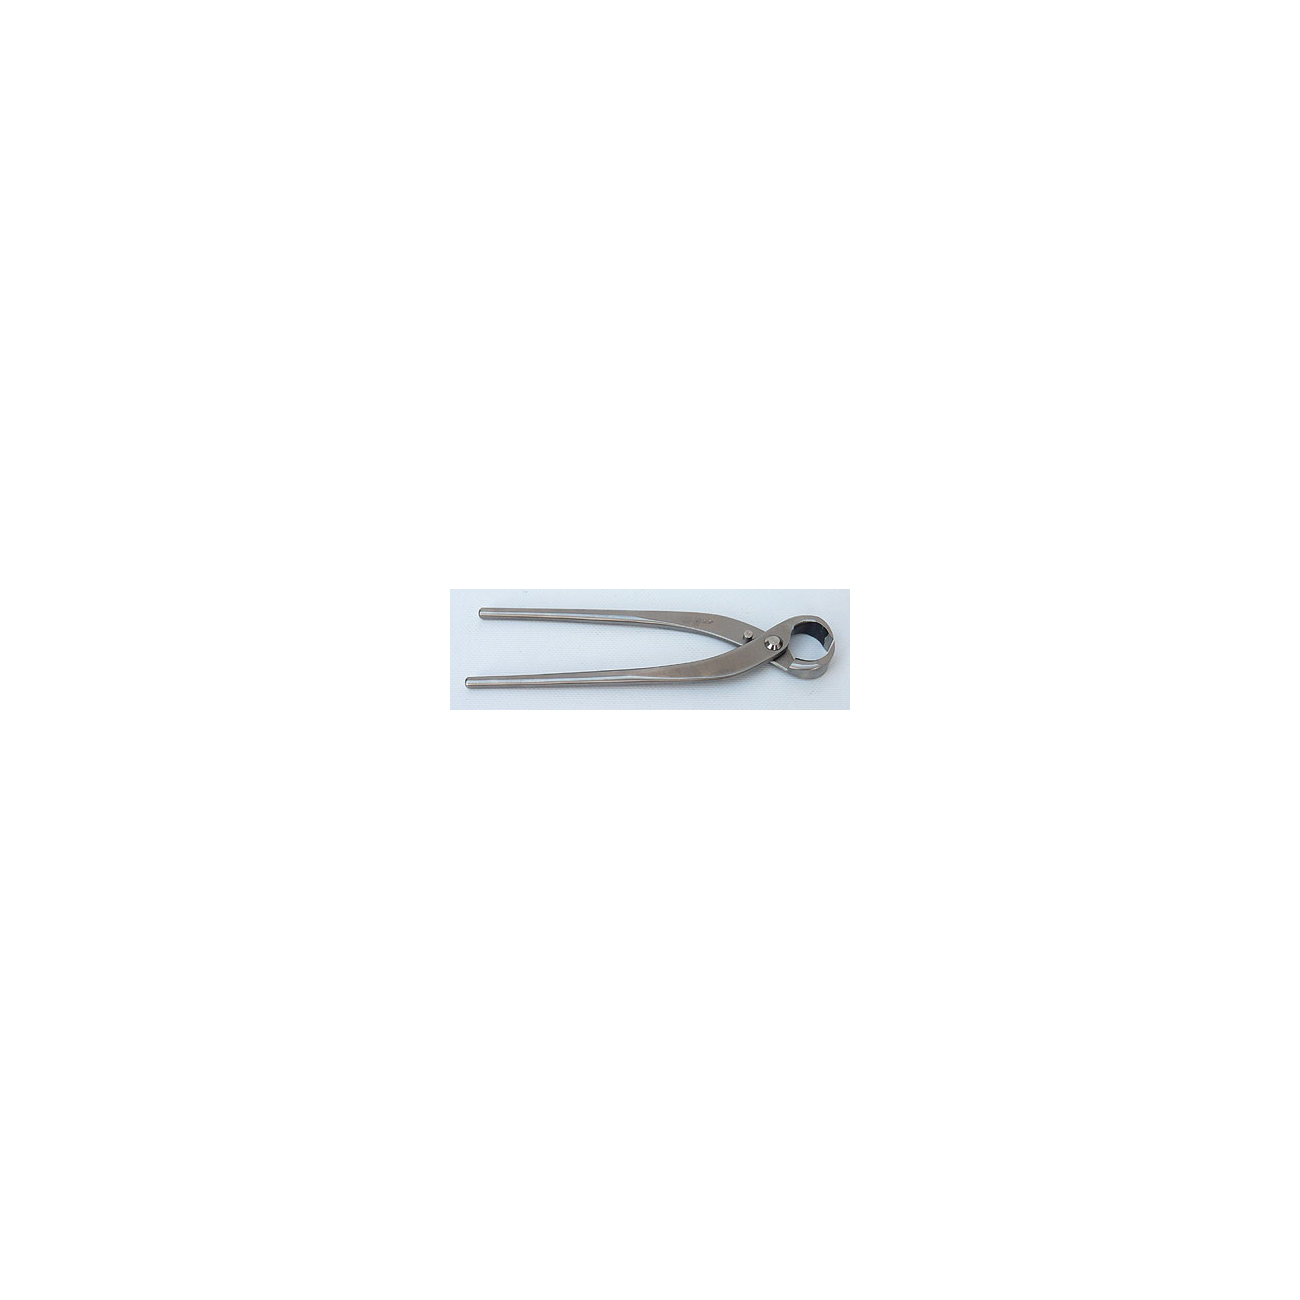 Stainless steel root cutter Kaneshin KN813  210 mm